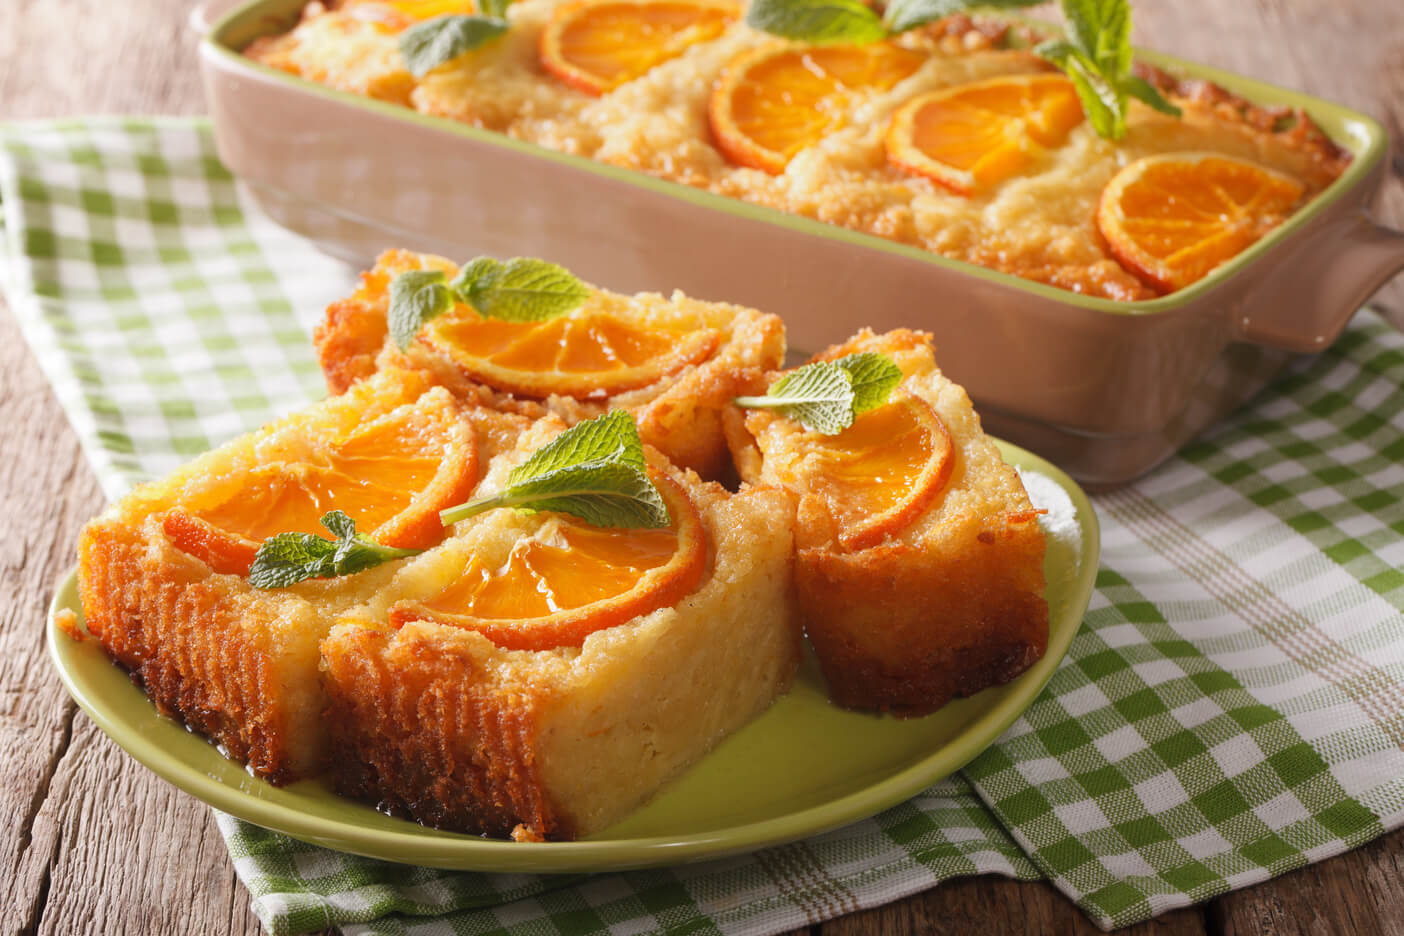 Portokalopita (Traditional Greek Orange Phyllo Cake) Recipe - Recipes.net